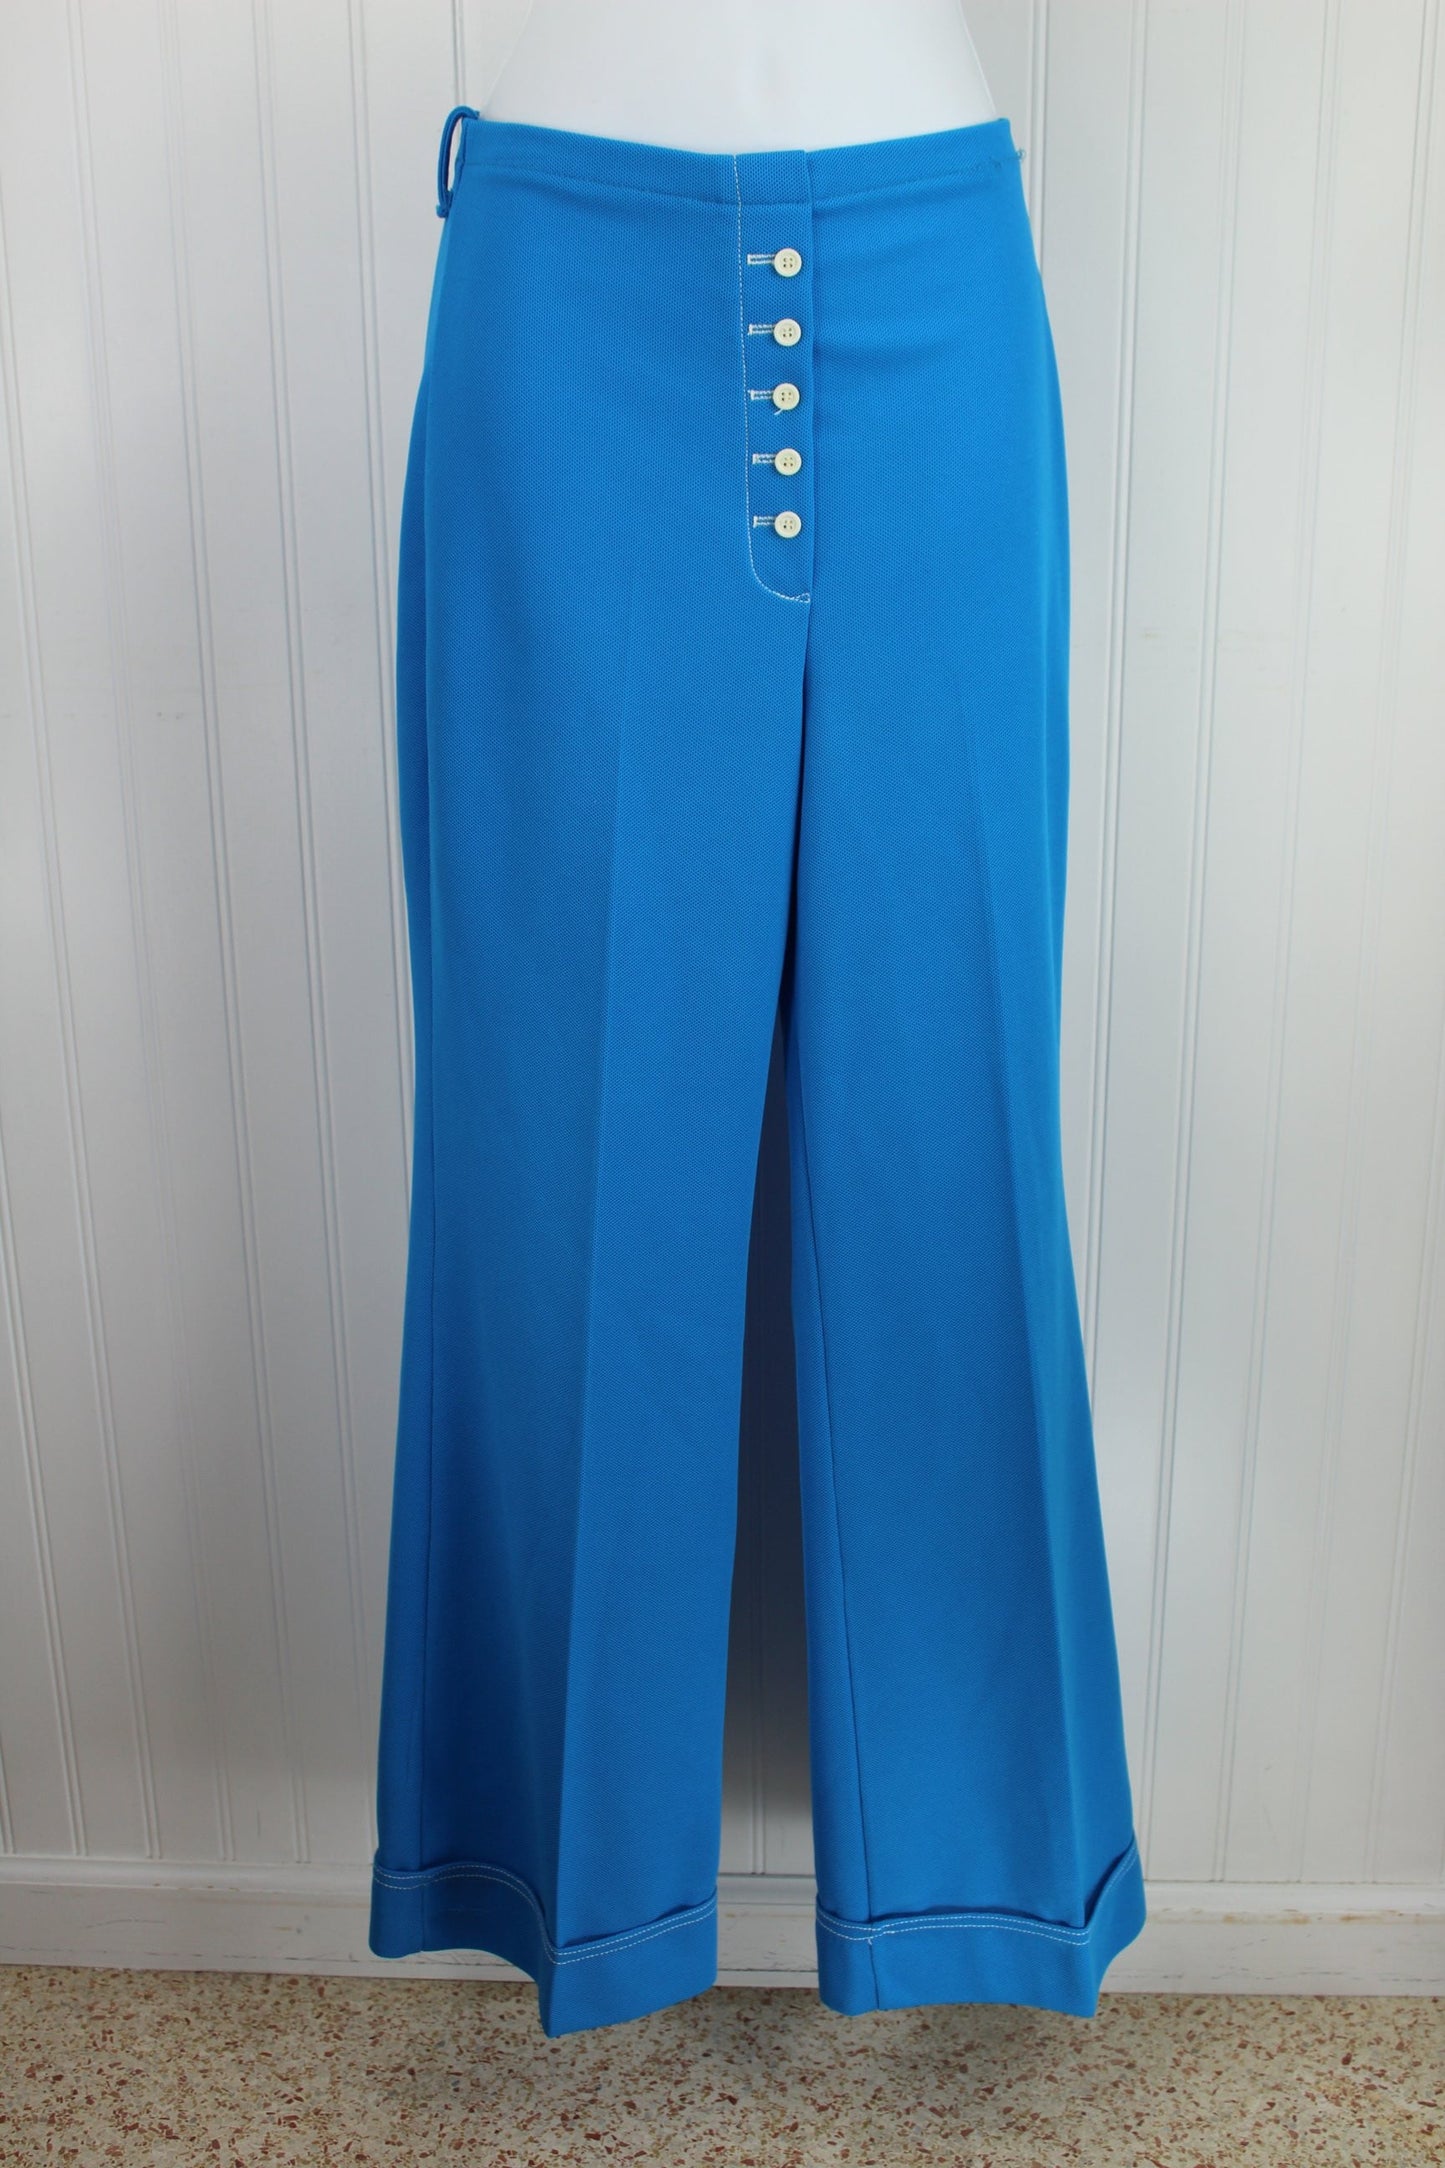 Vintage Jantzen Nautical Pants Suit 1960s - Button Tab Flare Pants - Long Sleeve Jacket in style